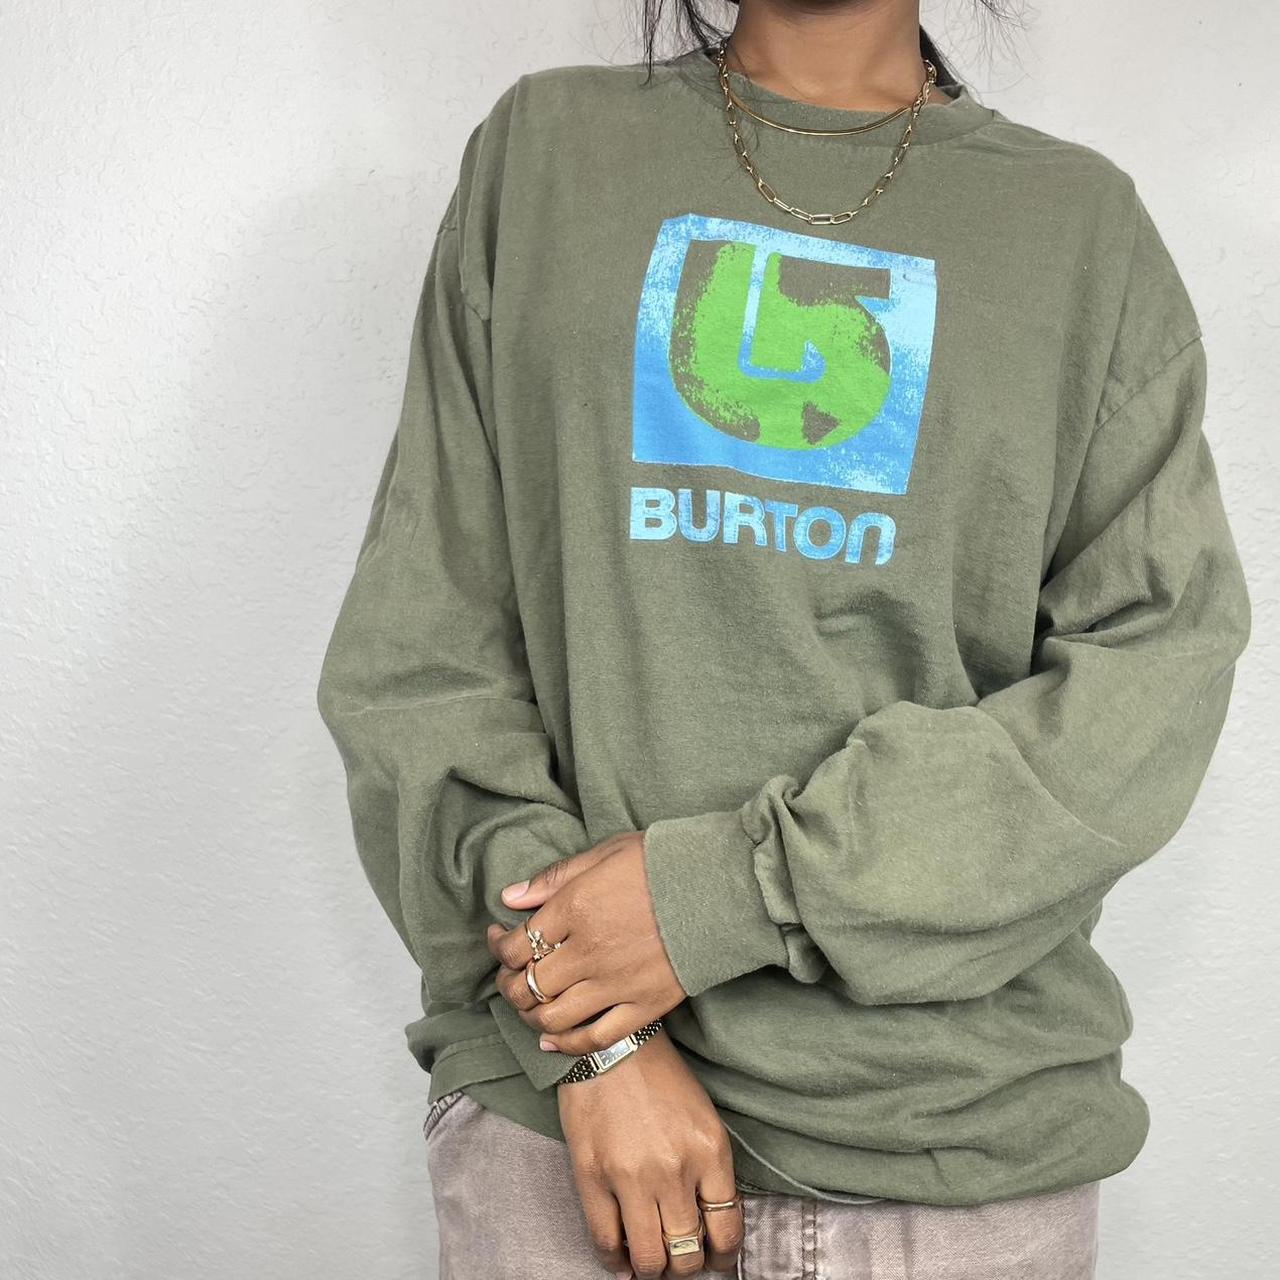 Burton Women's Green and Blue T-shirt (4)